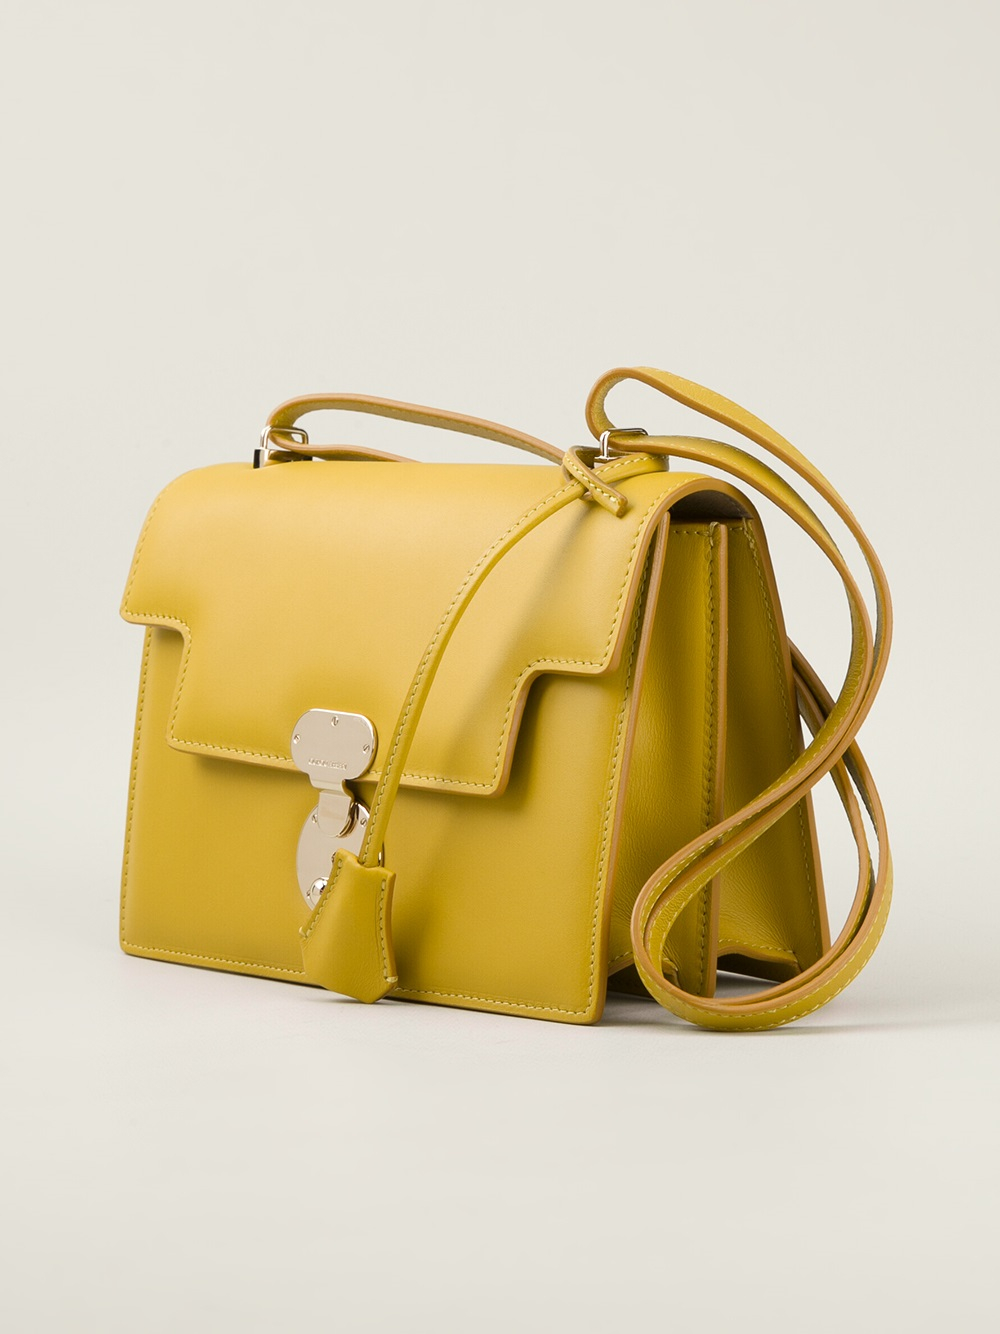 Lyst - Giorgio Armani Flap Closure Shoulder Bag in Yellow